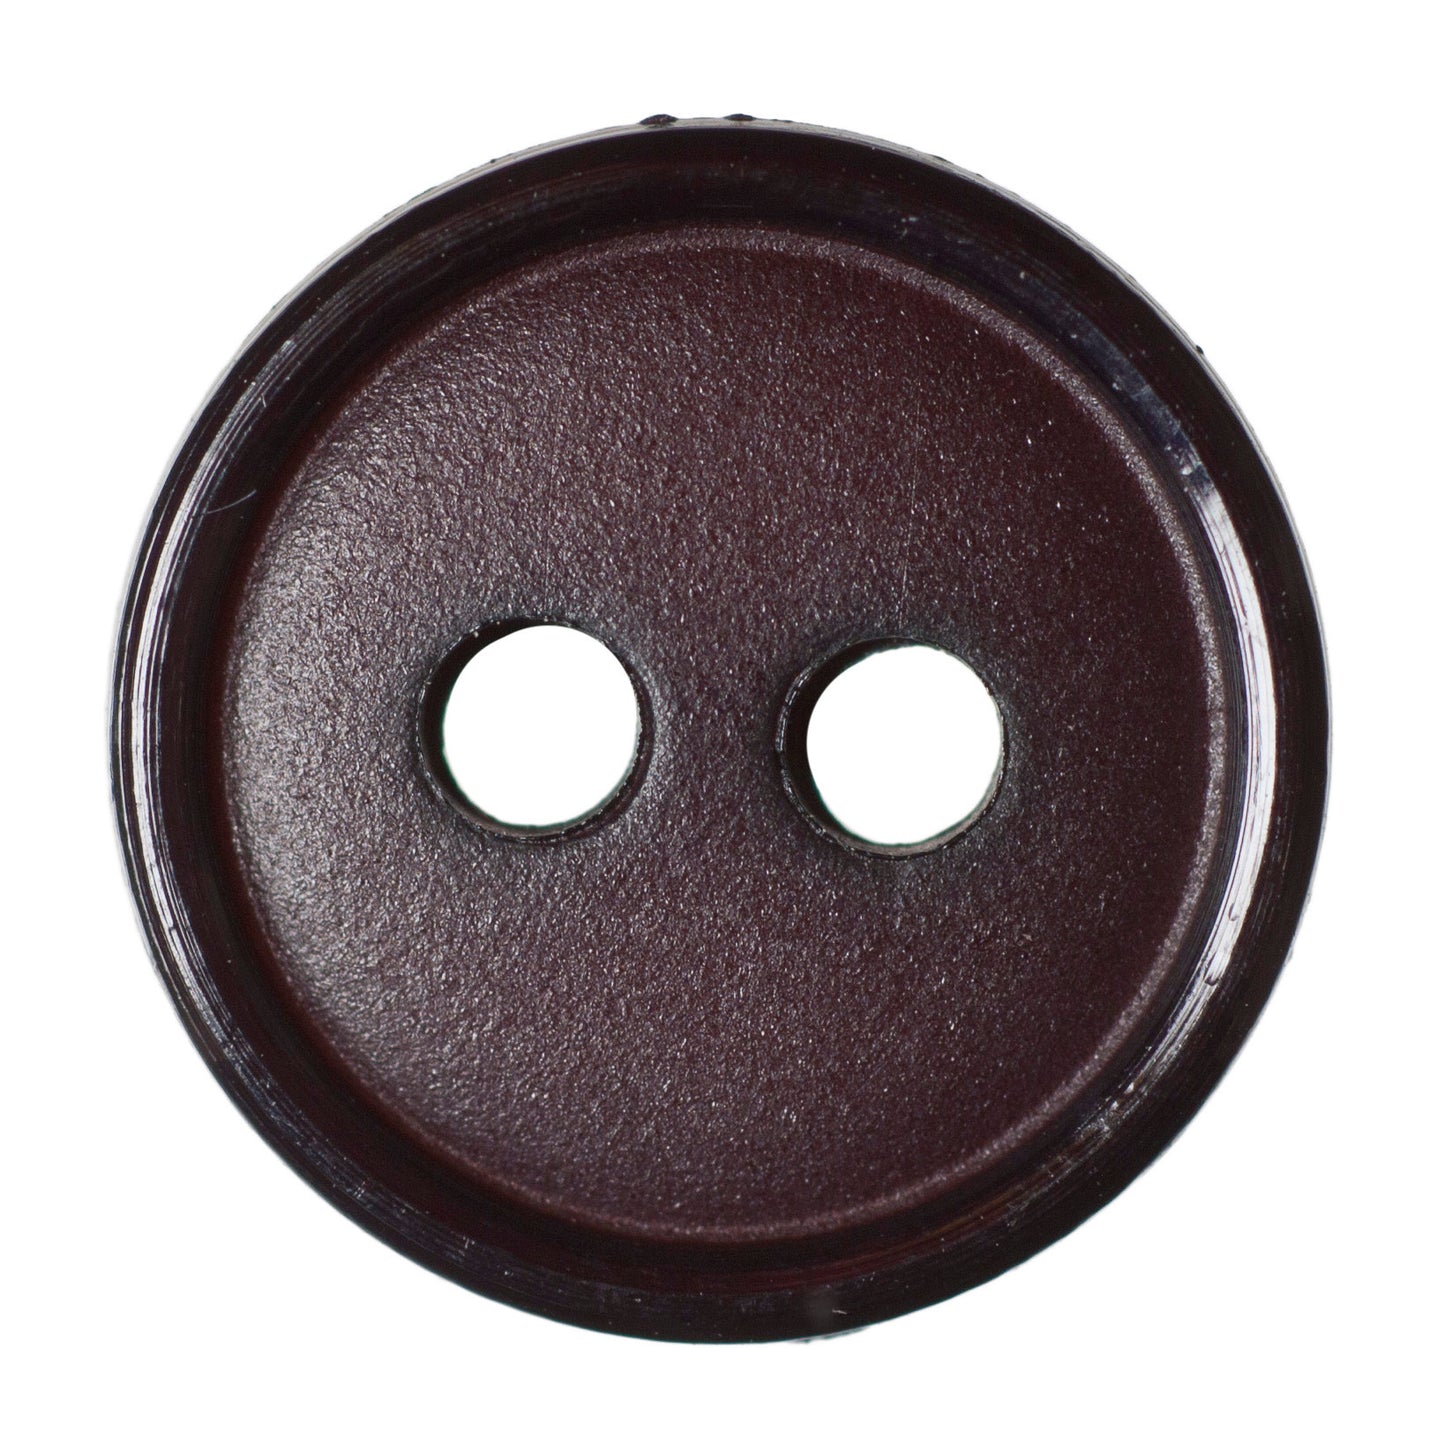 Narrow Rim 2 Hole Button Shiny/Matt - 11mm - Brown